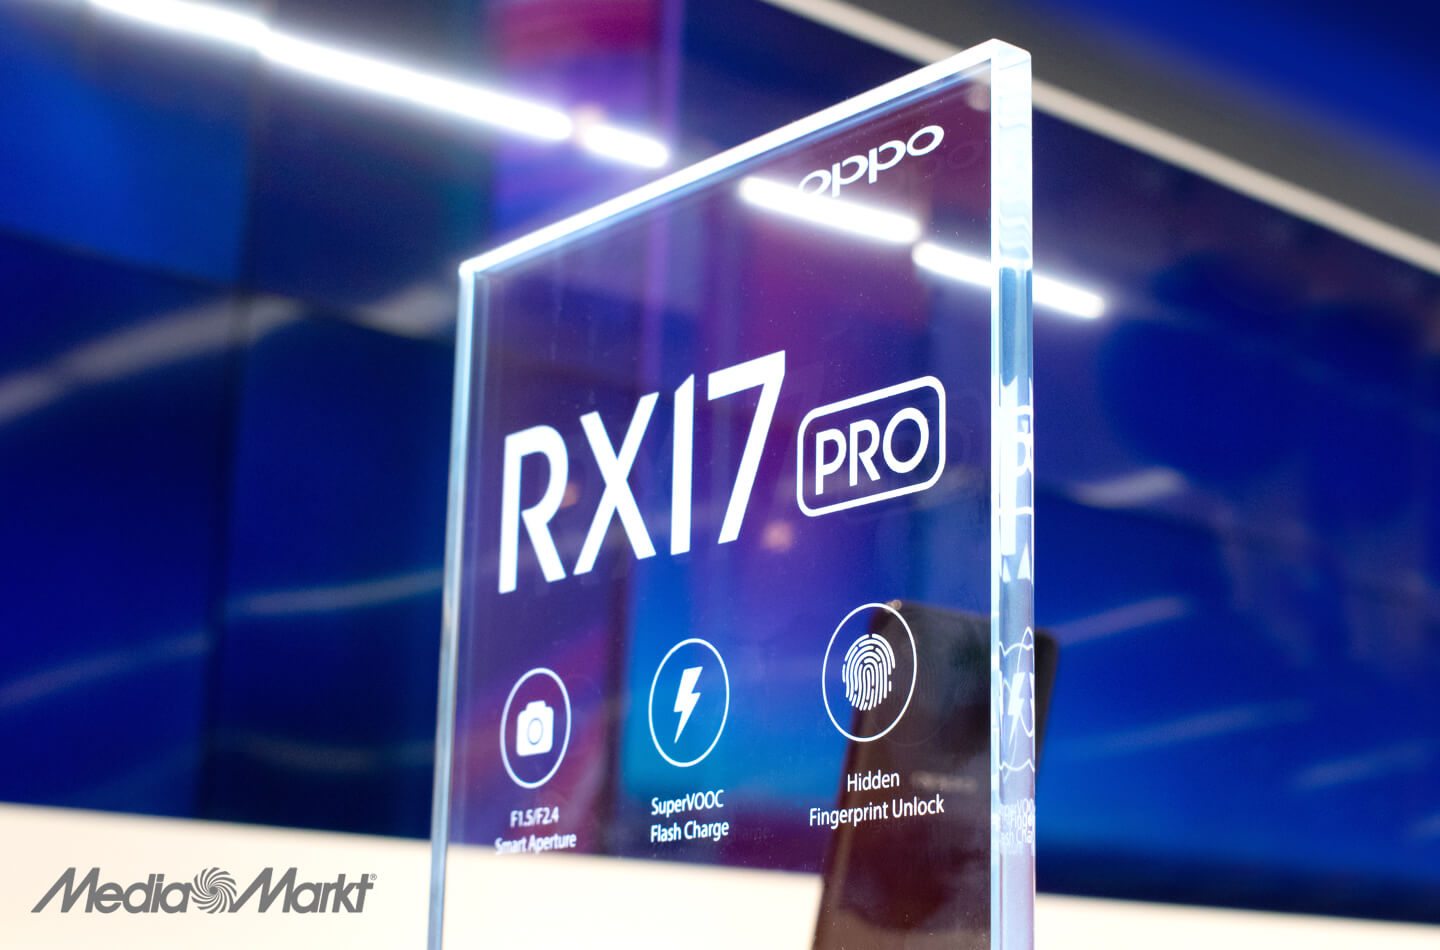 Oppo RX17 Pro